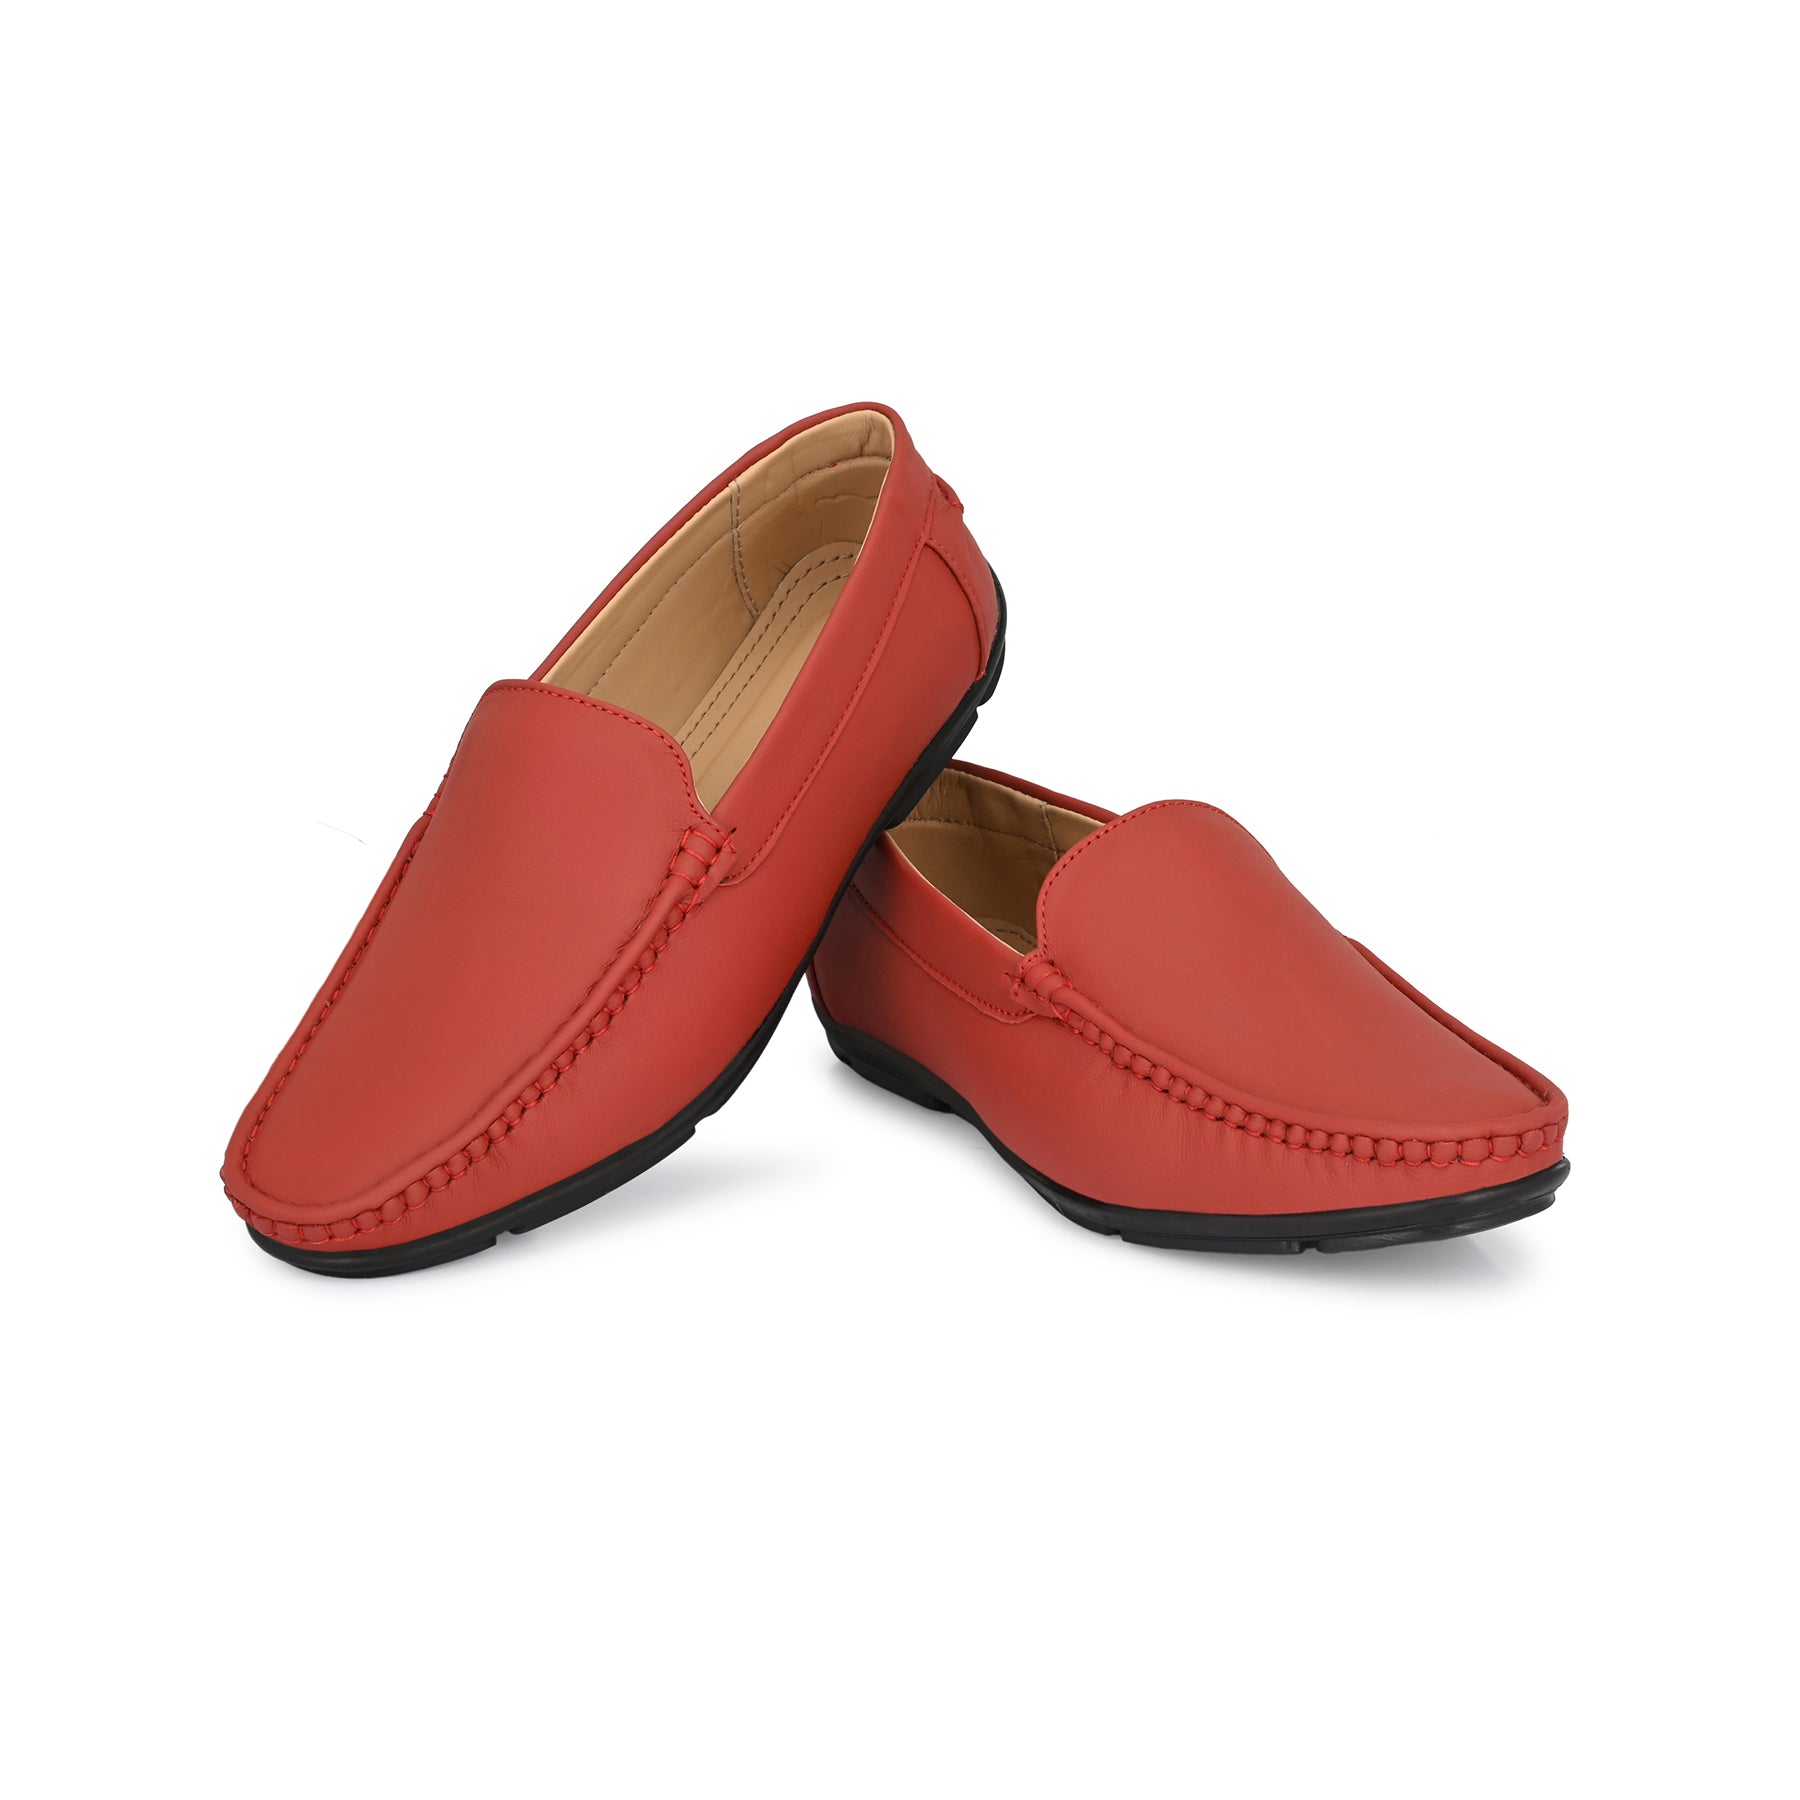 Red Leather Loafer For Men